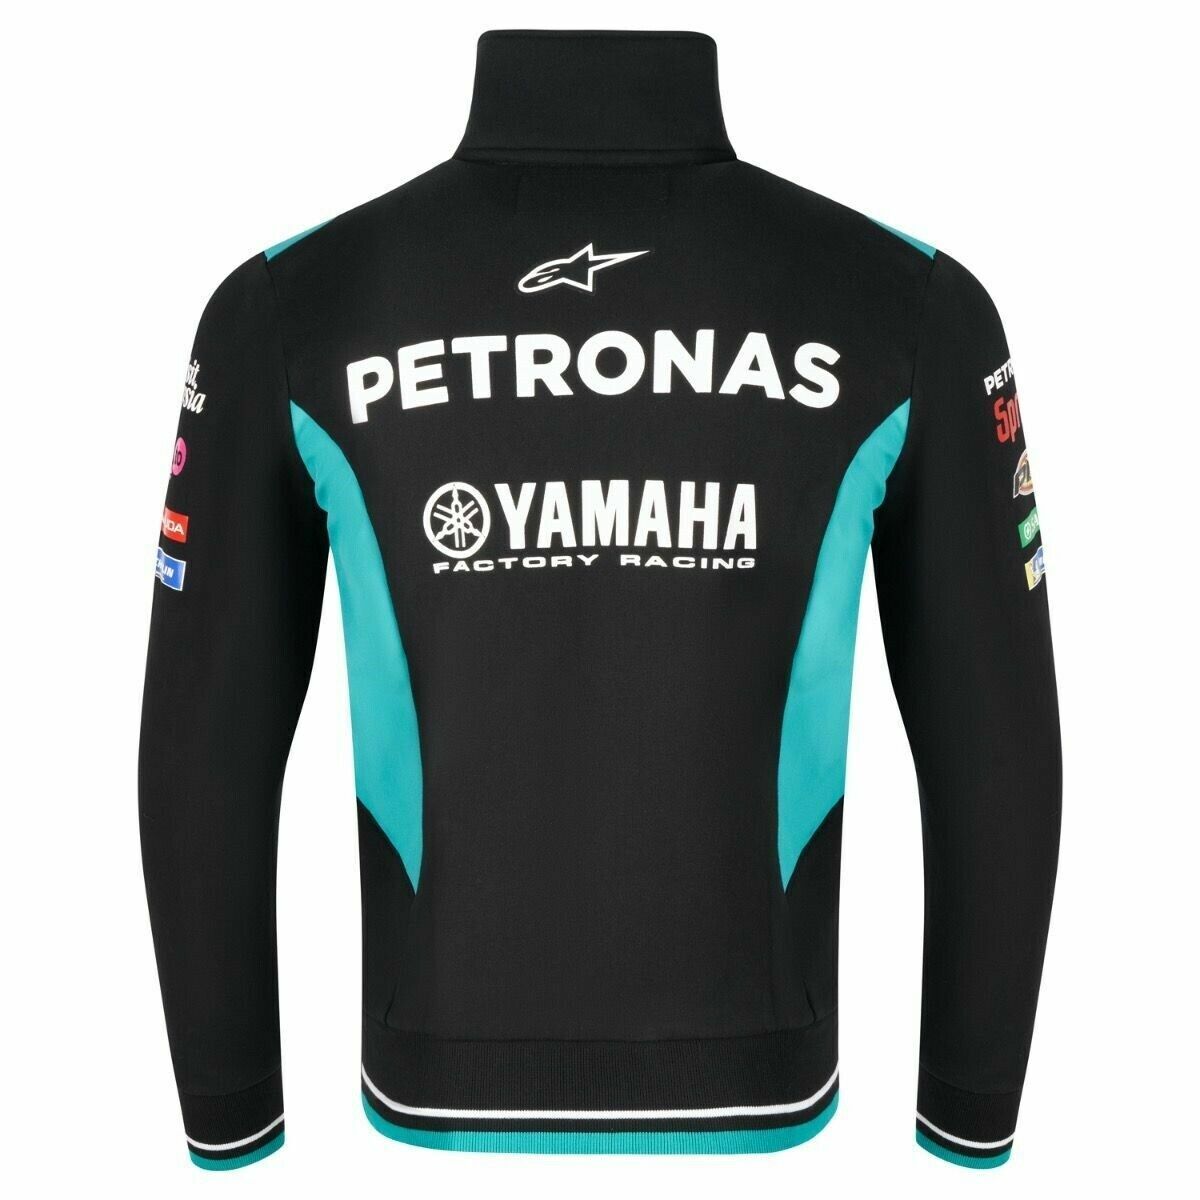 Official Petronas Yamaha Team Track Top - 20Py Att